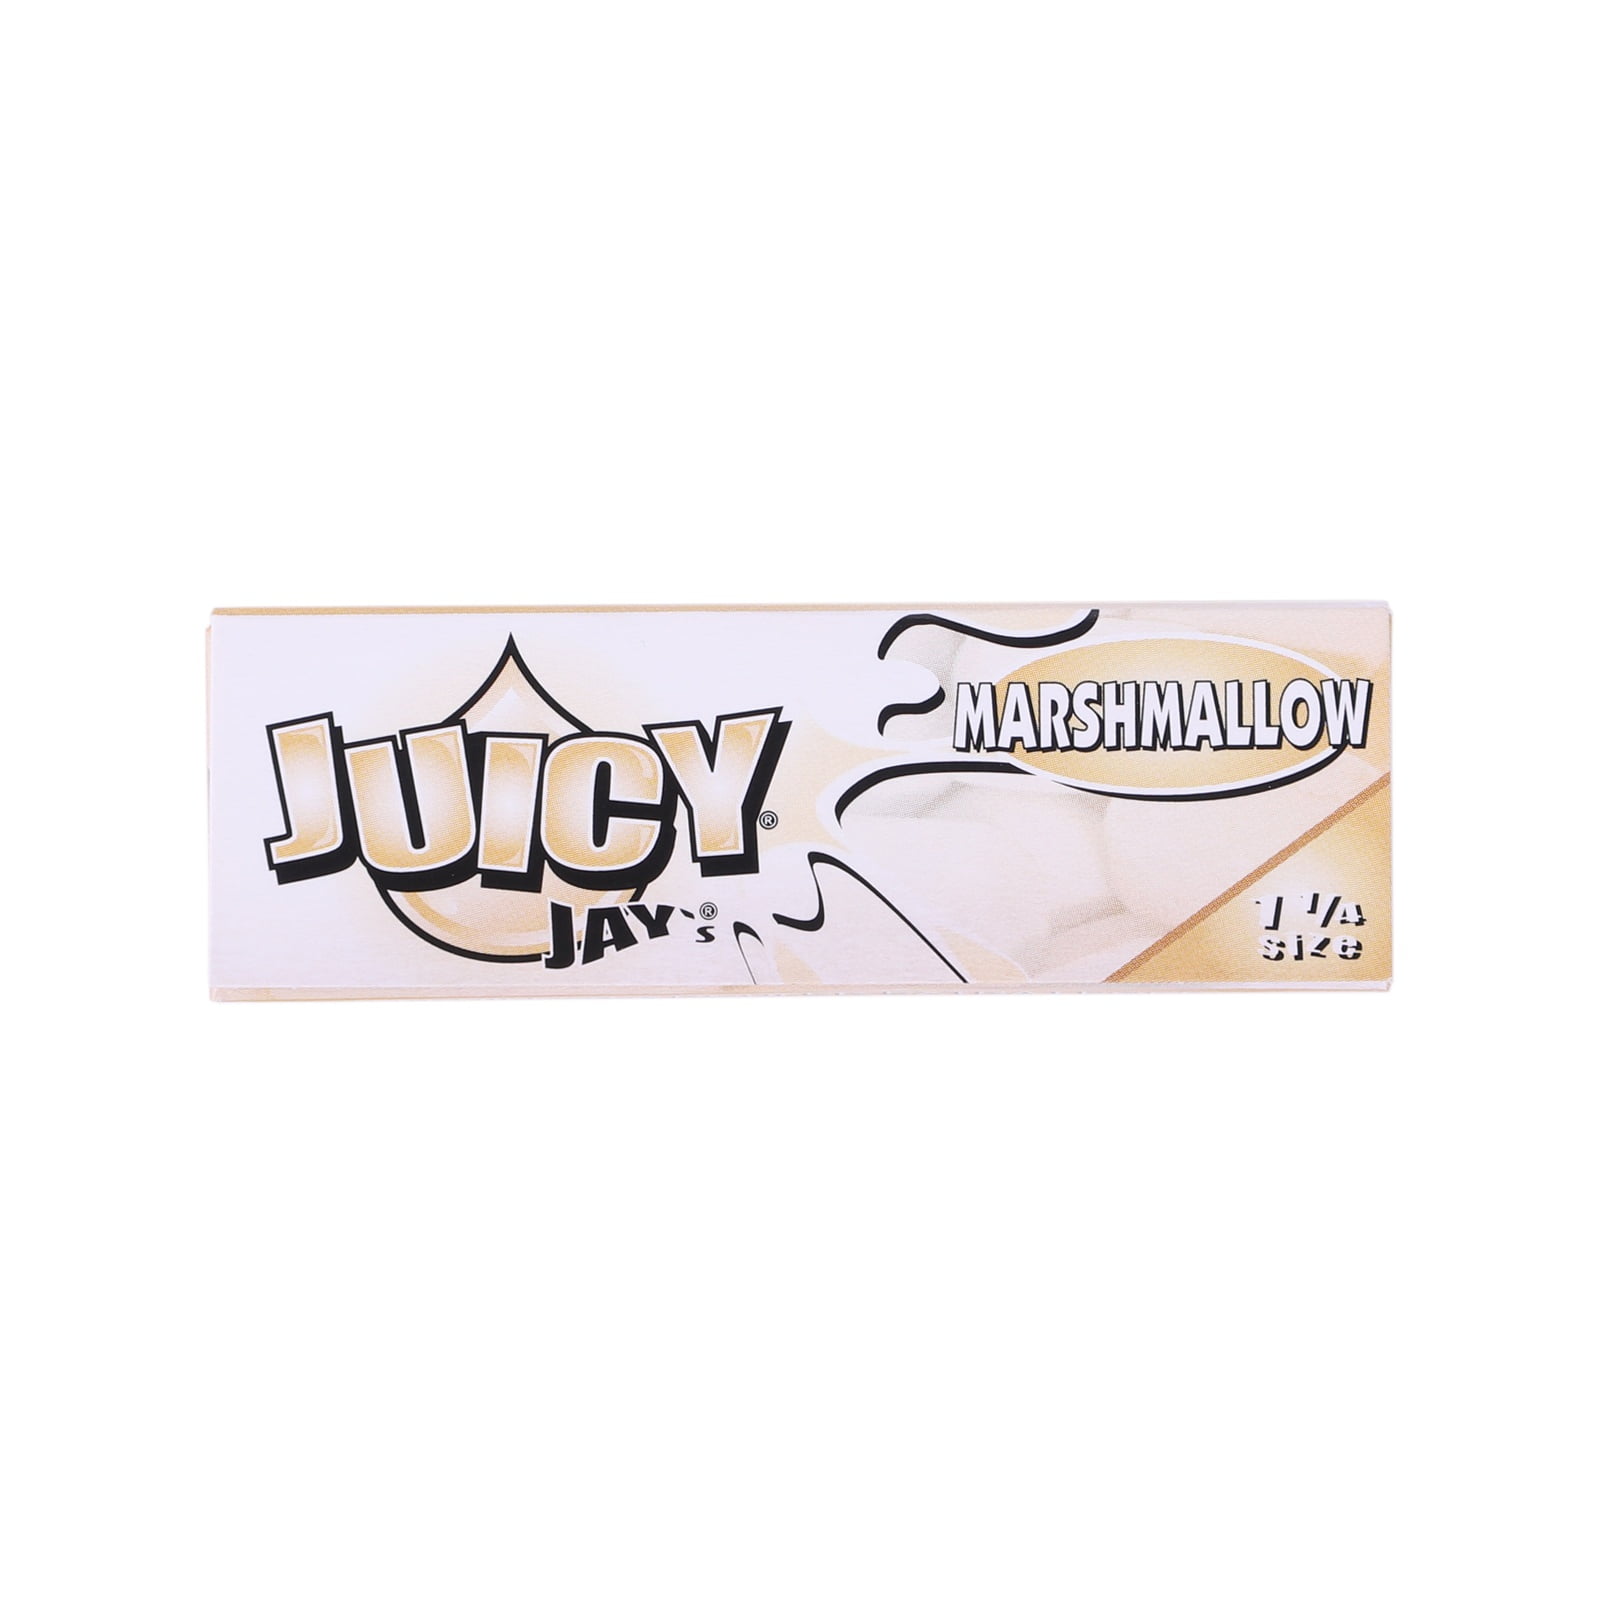 Бумага Juicy Jay’s Marshmallow 1¼